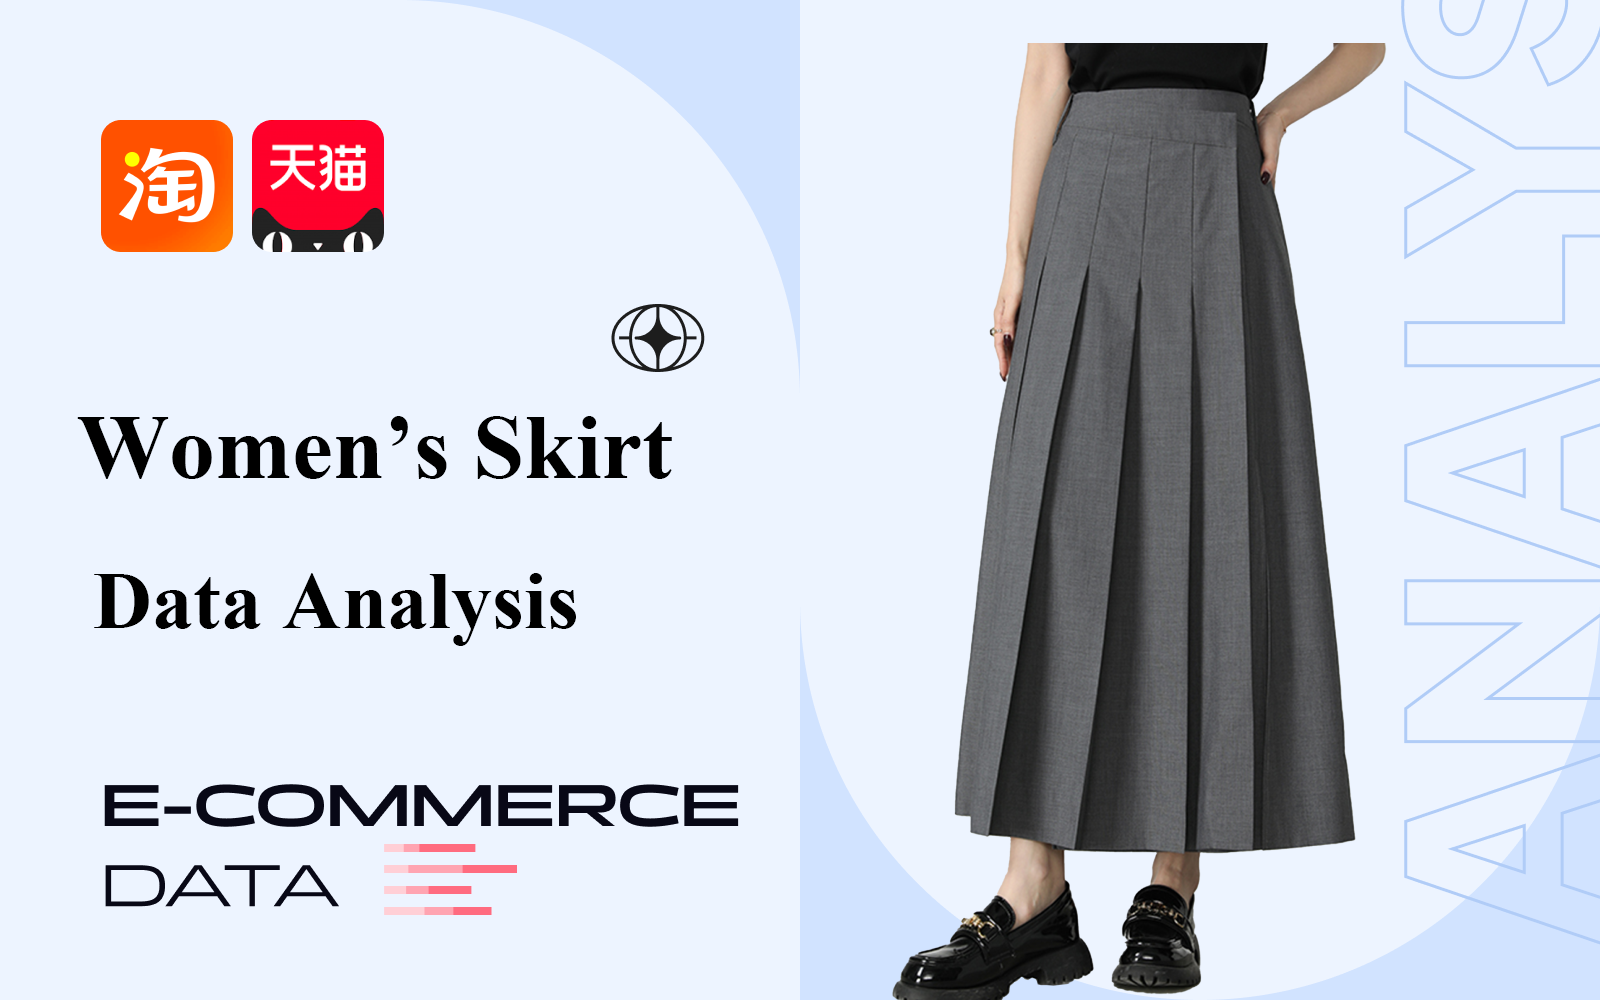 Skirt -- The Data Analysis of Womenswear E-Commerce